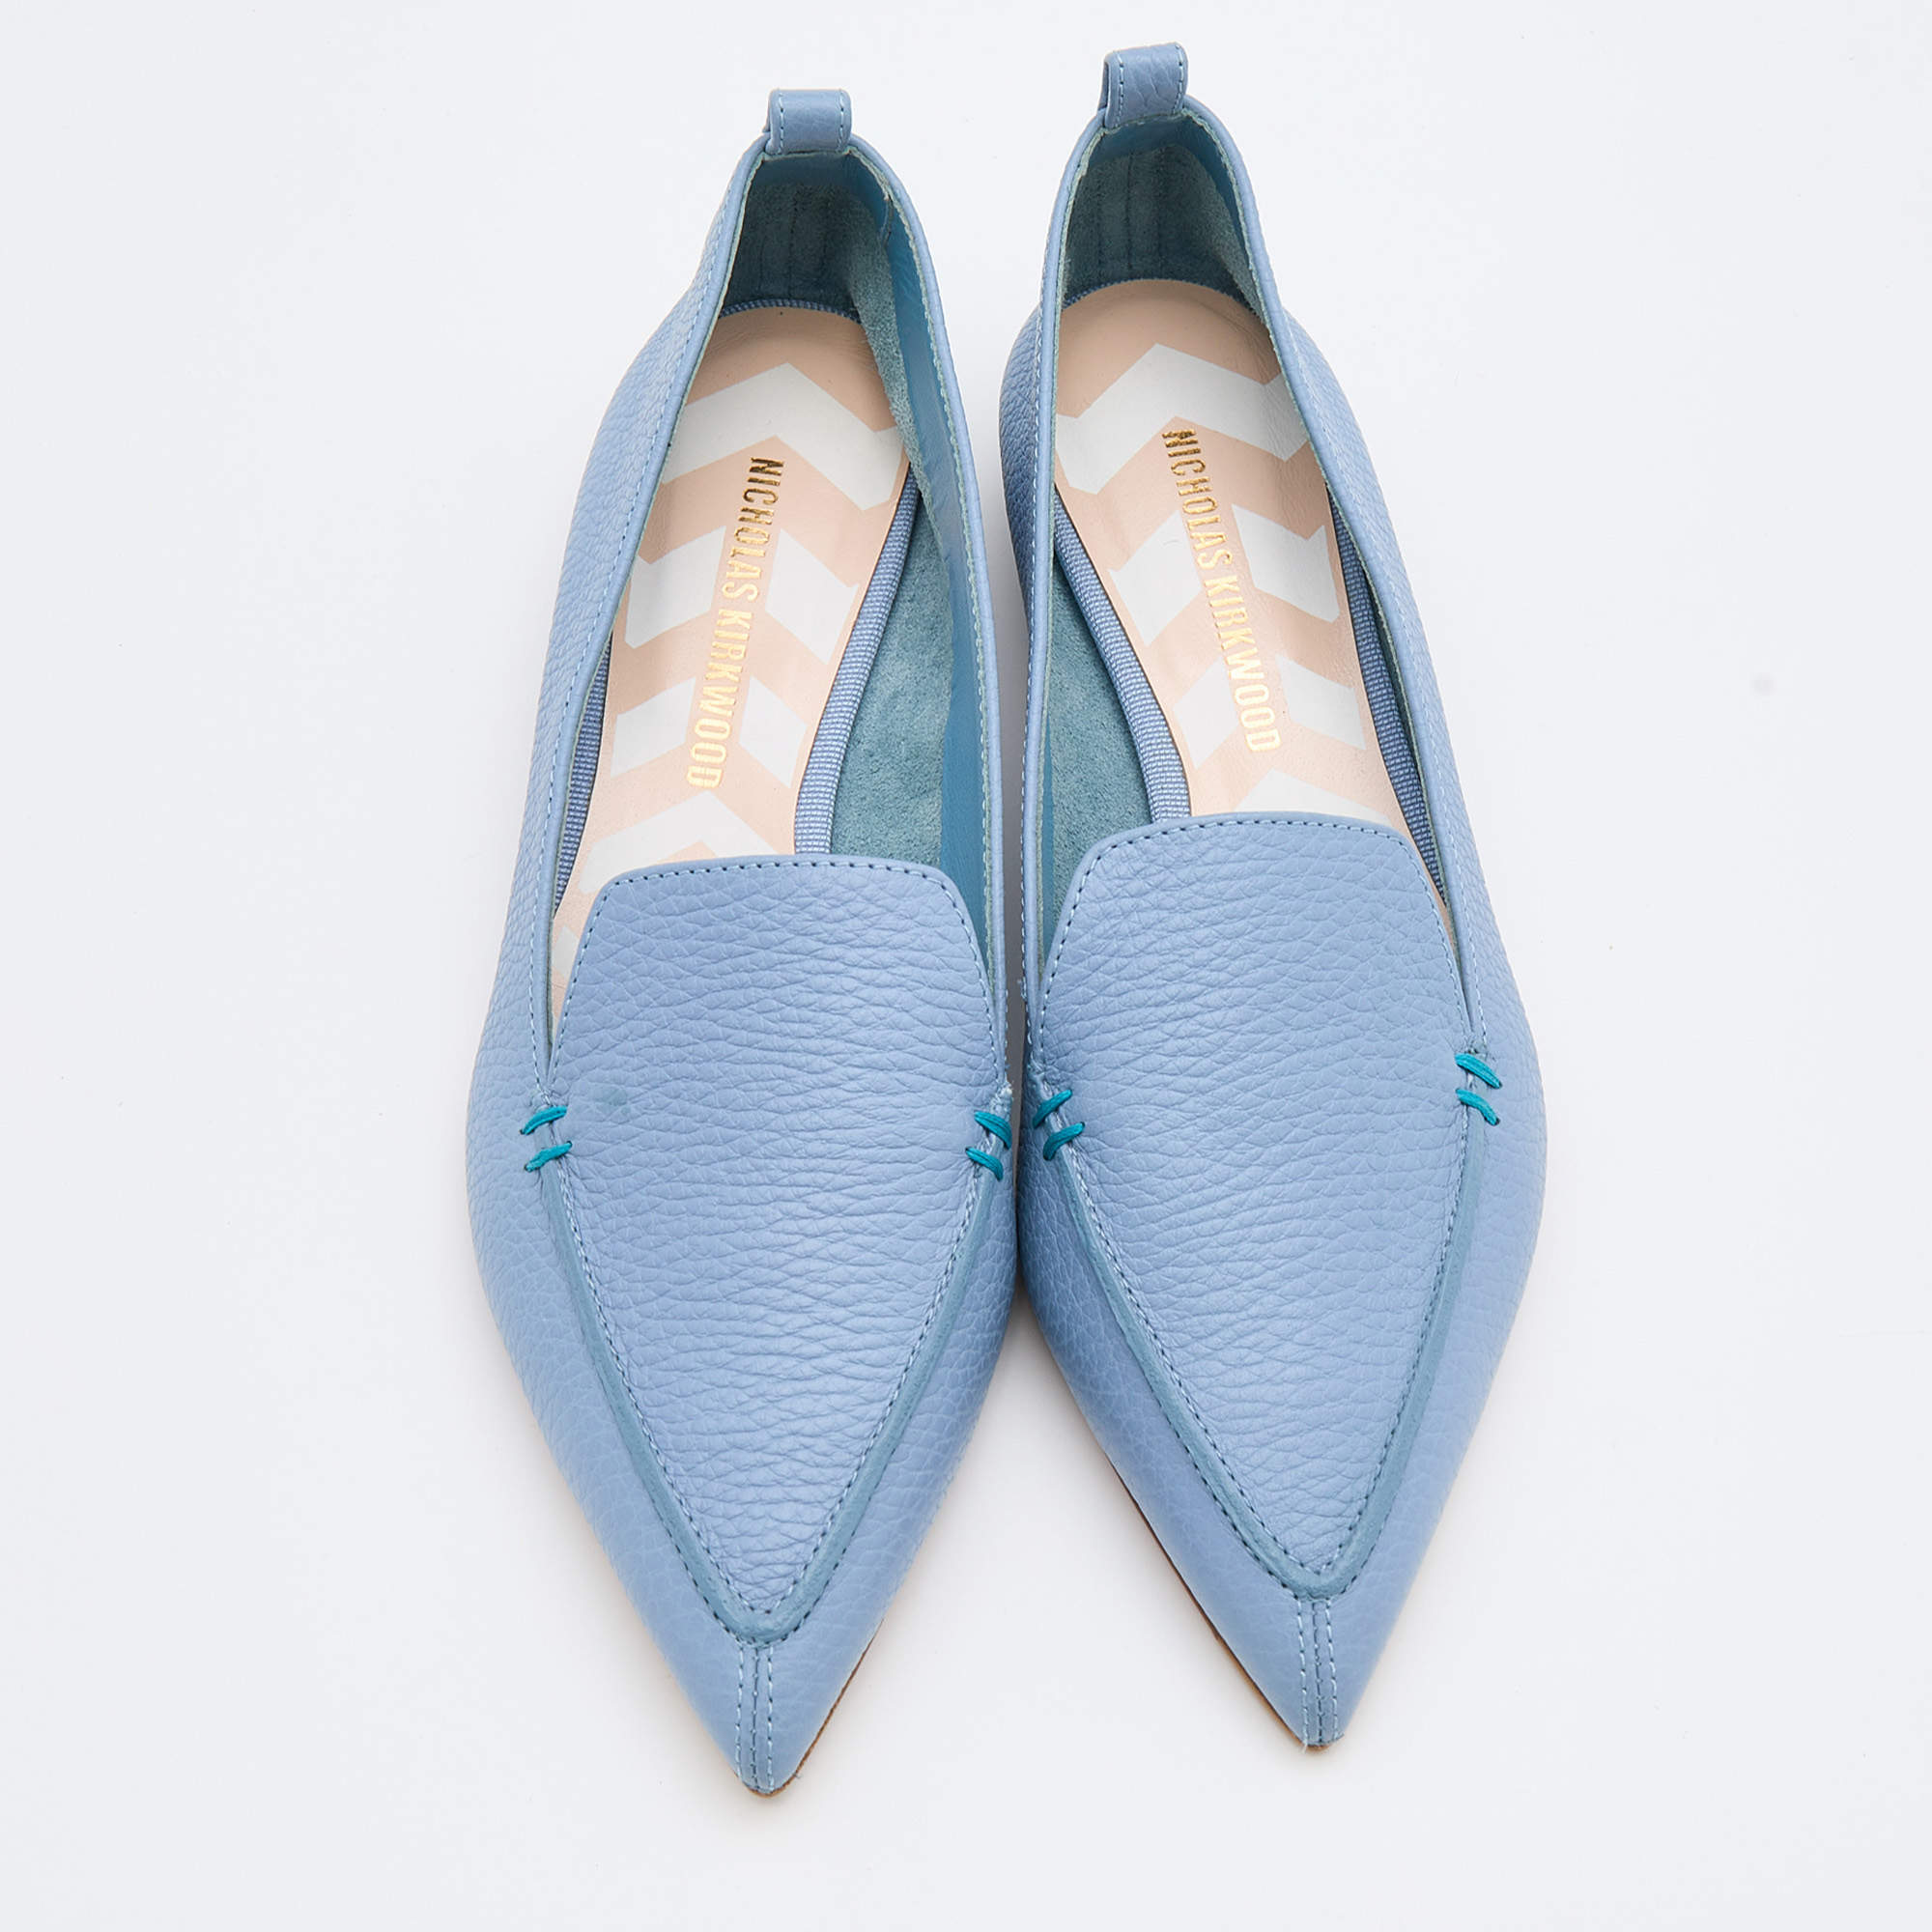 Nicholas Kirkwood Beya Navy Blue Loafers Flats Shoes Sz 37